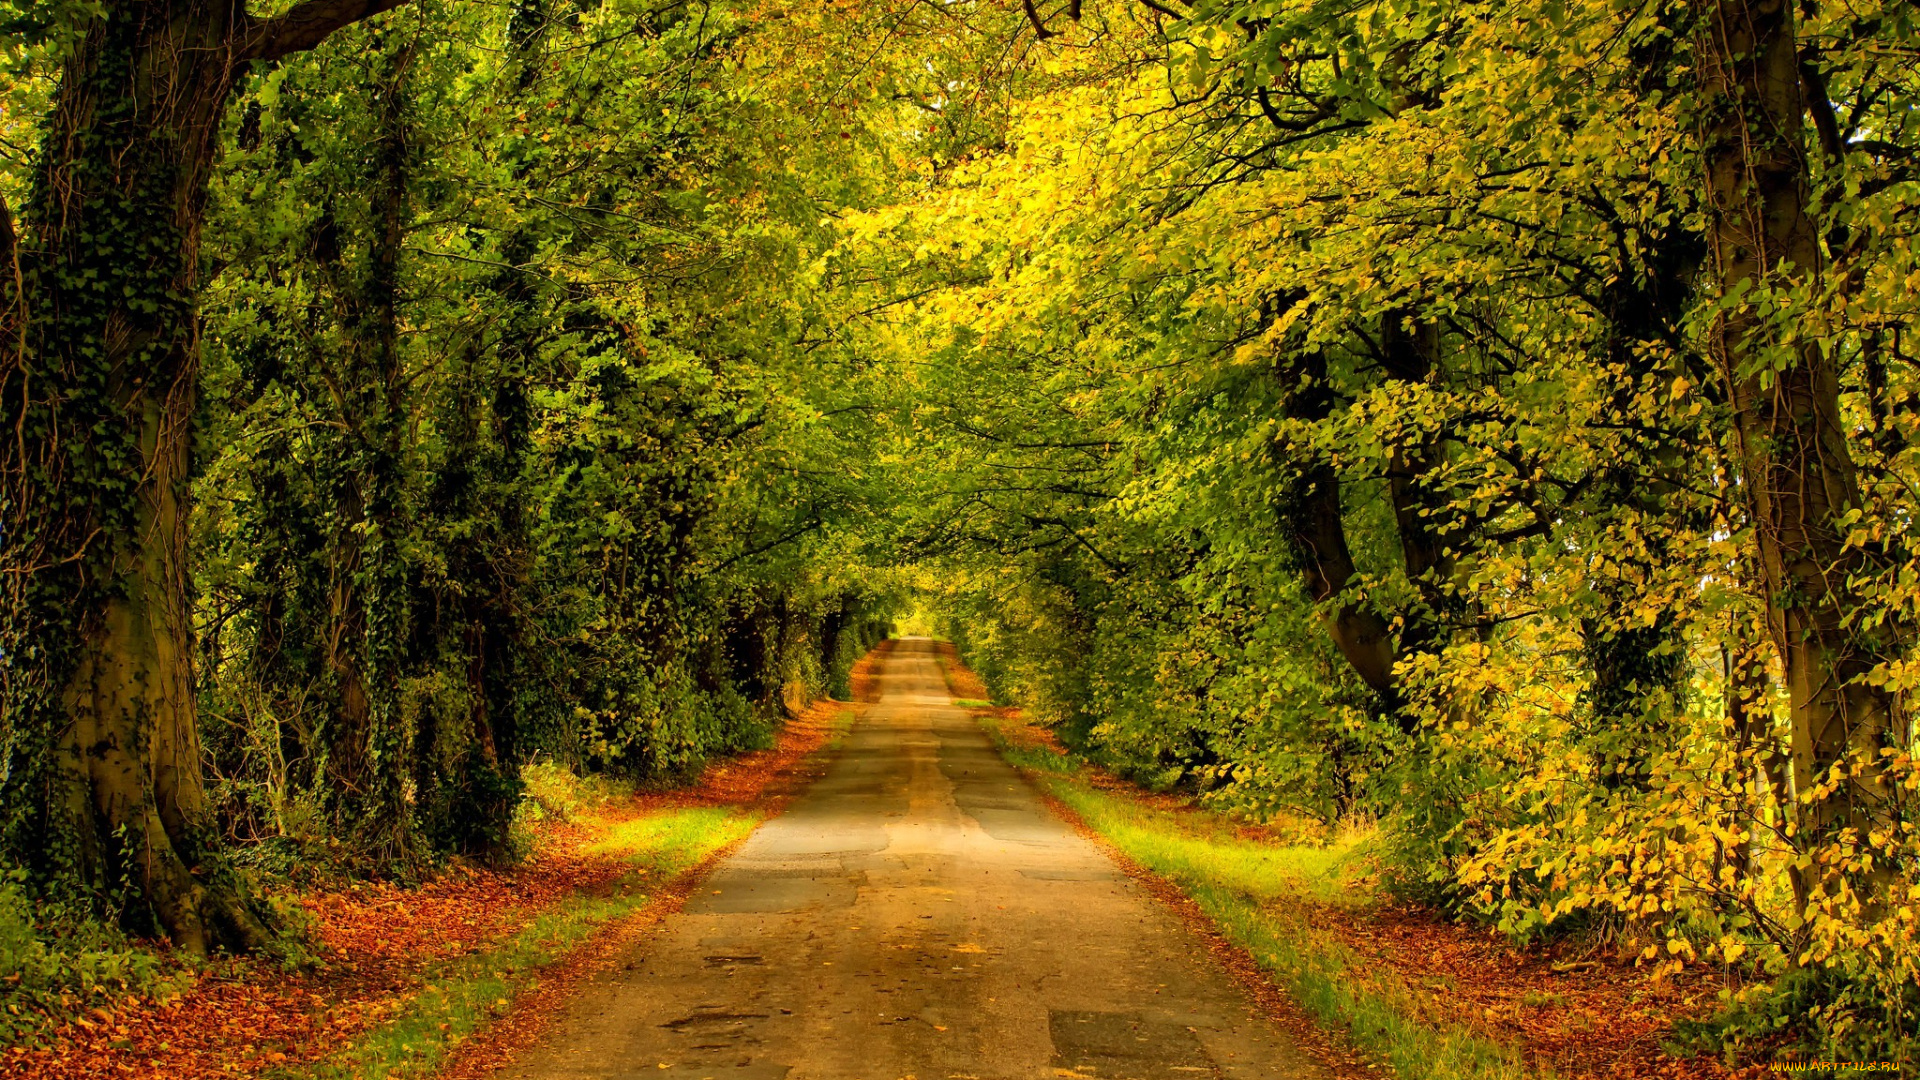 природа, дороги, forest, nature, park, trees, leaves, colorful, road, path, autumn, fall, colors, walk, листья, осень, деревья, дорога, лес, парк